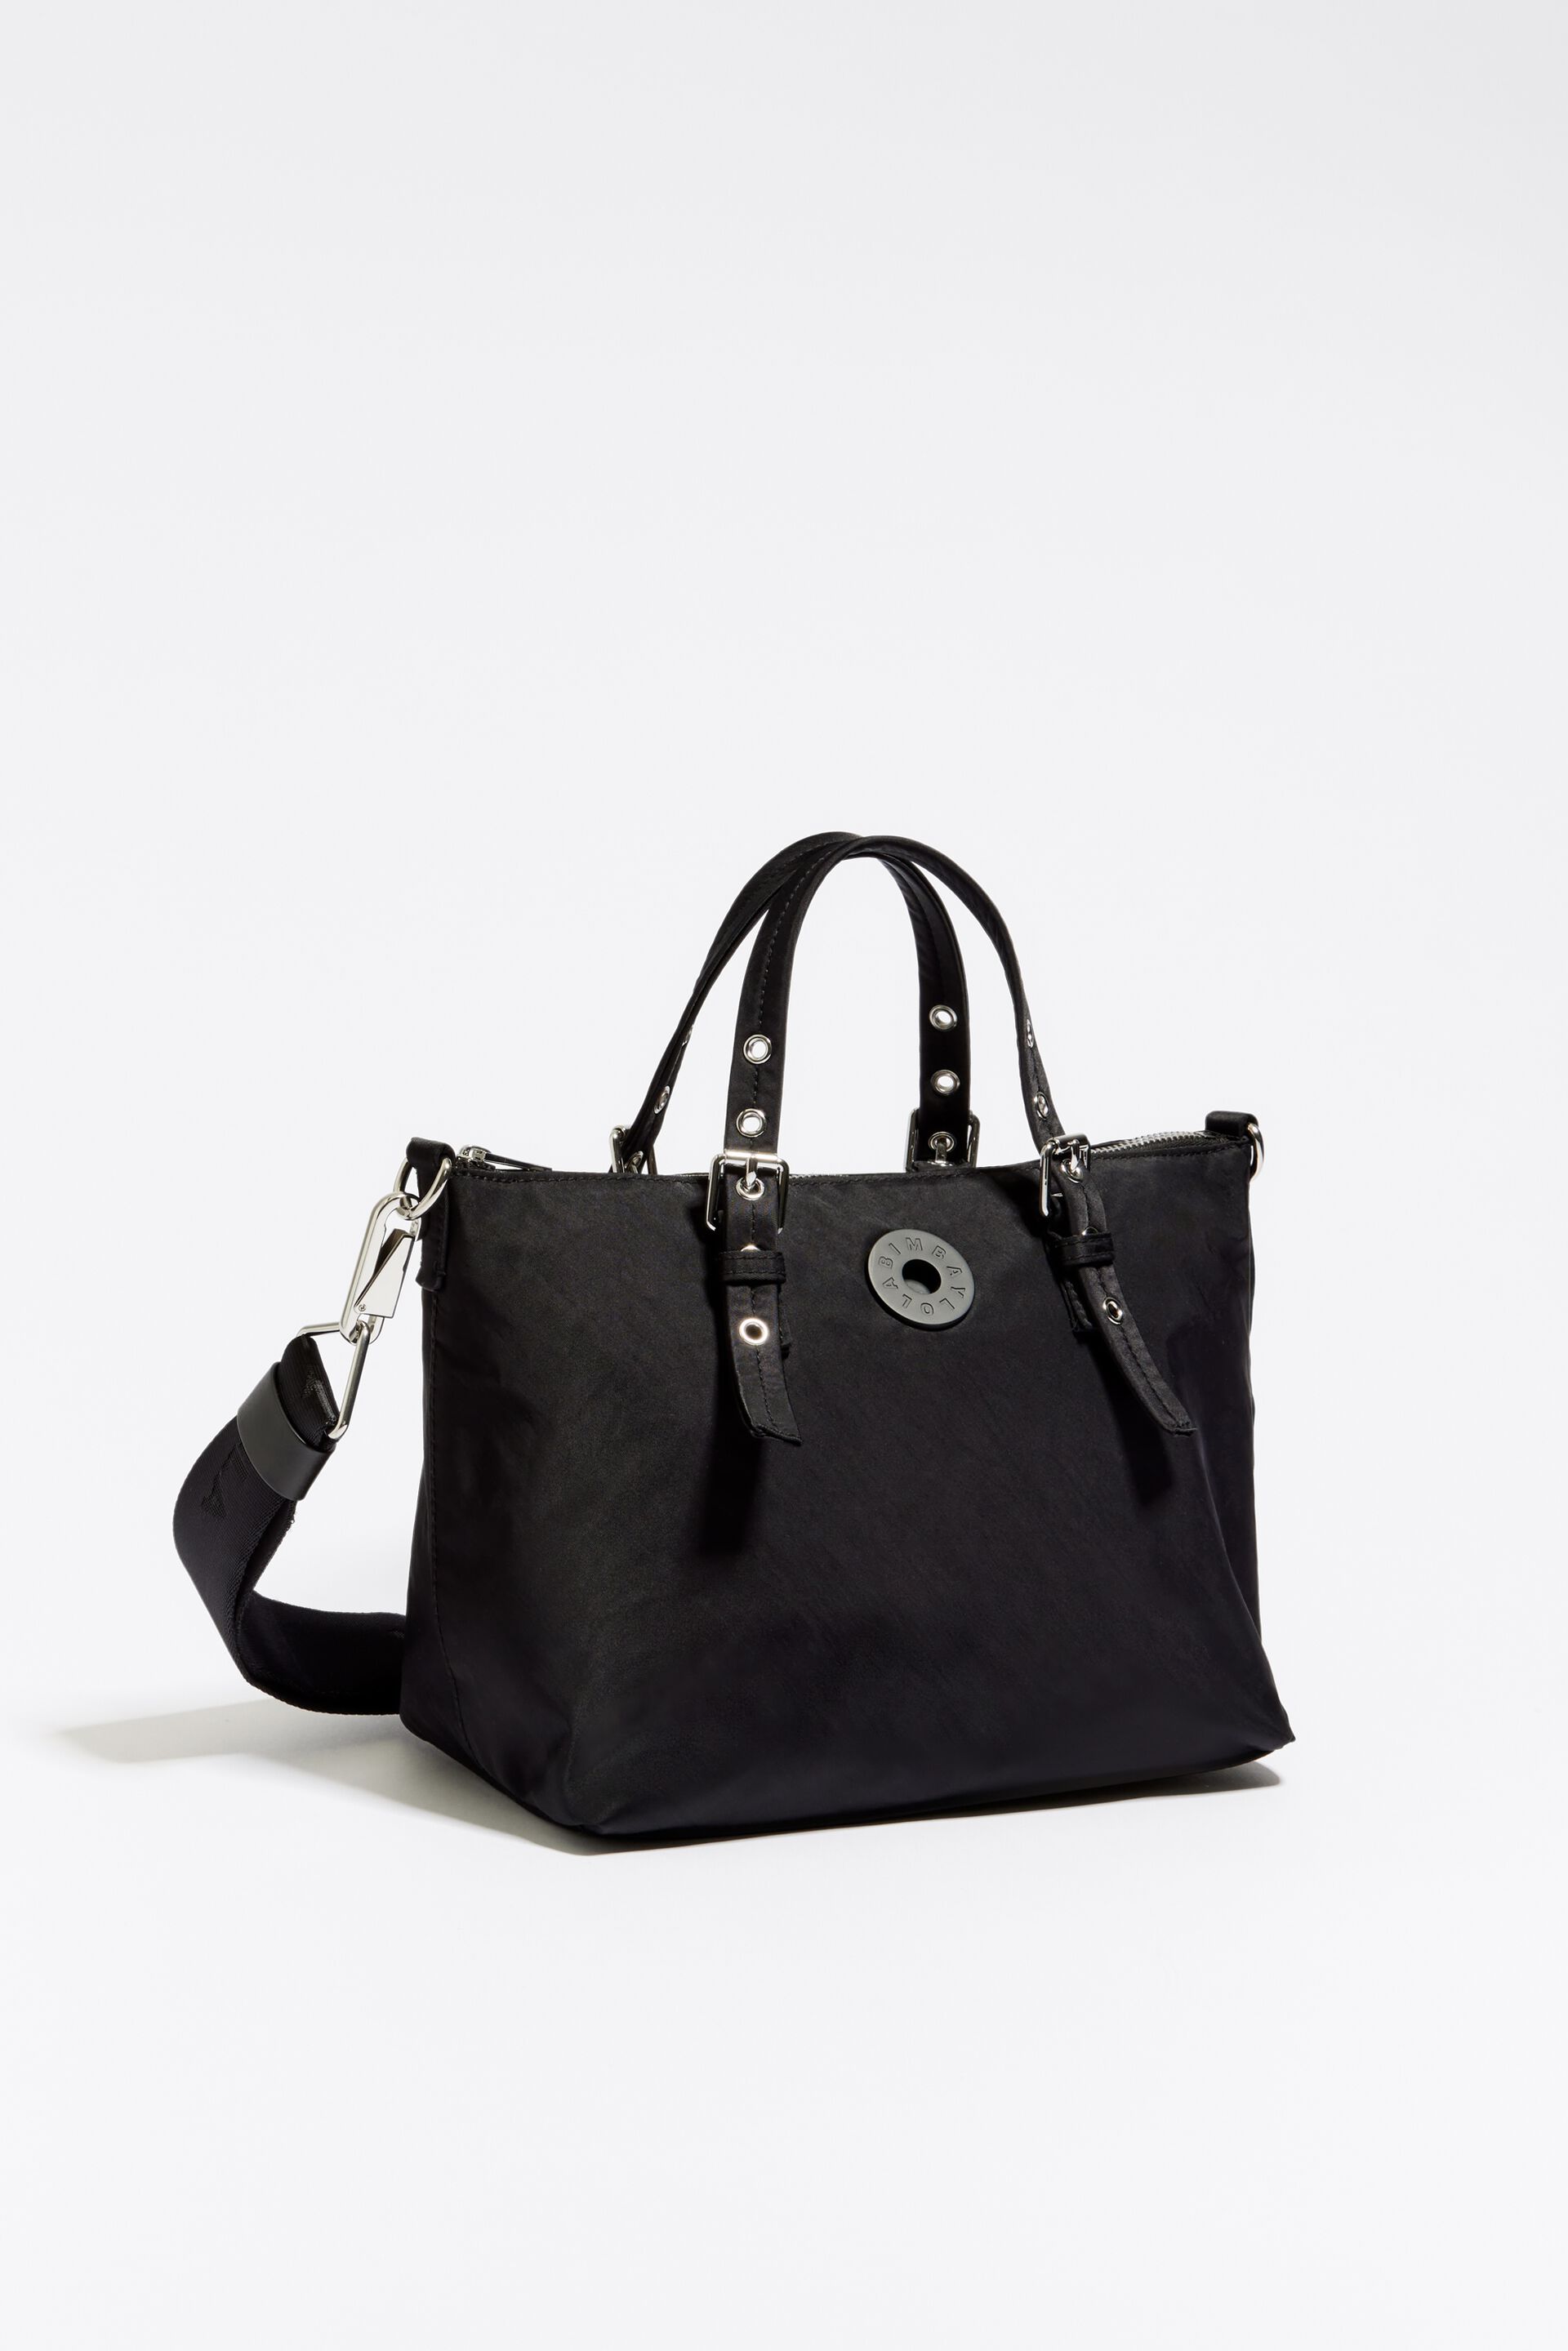 Bimba Y Lola L Black Shopper Bag 